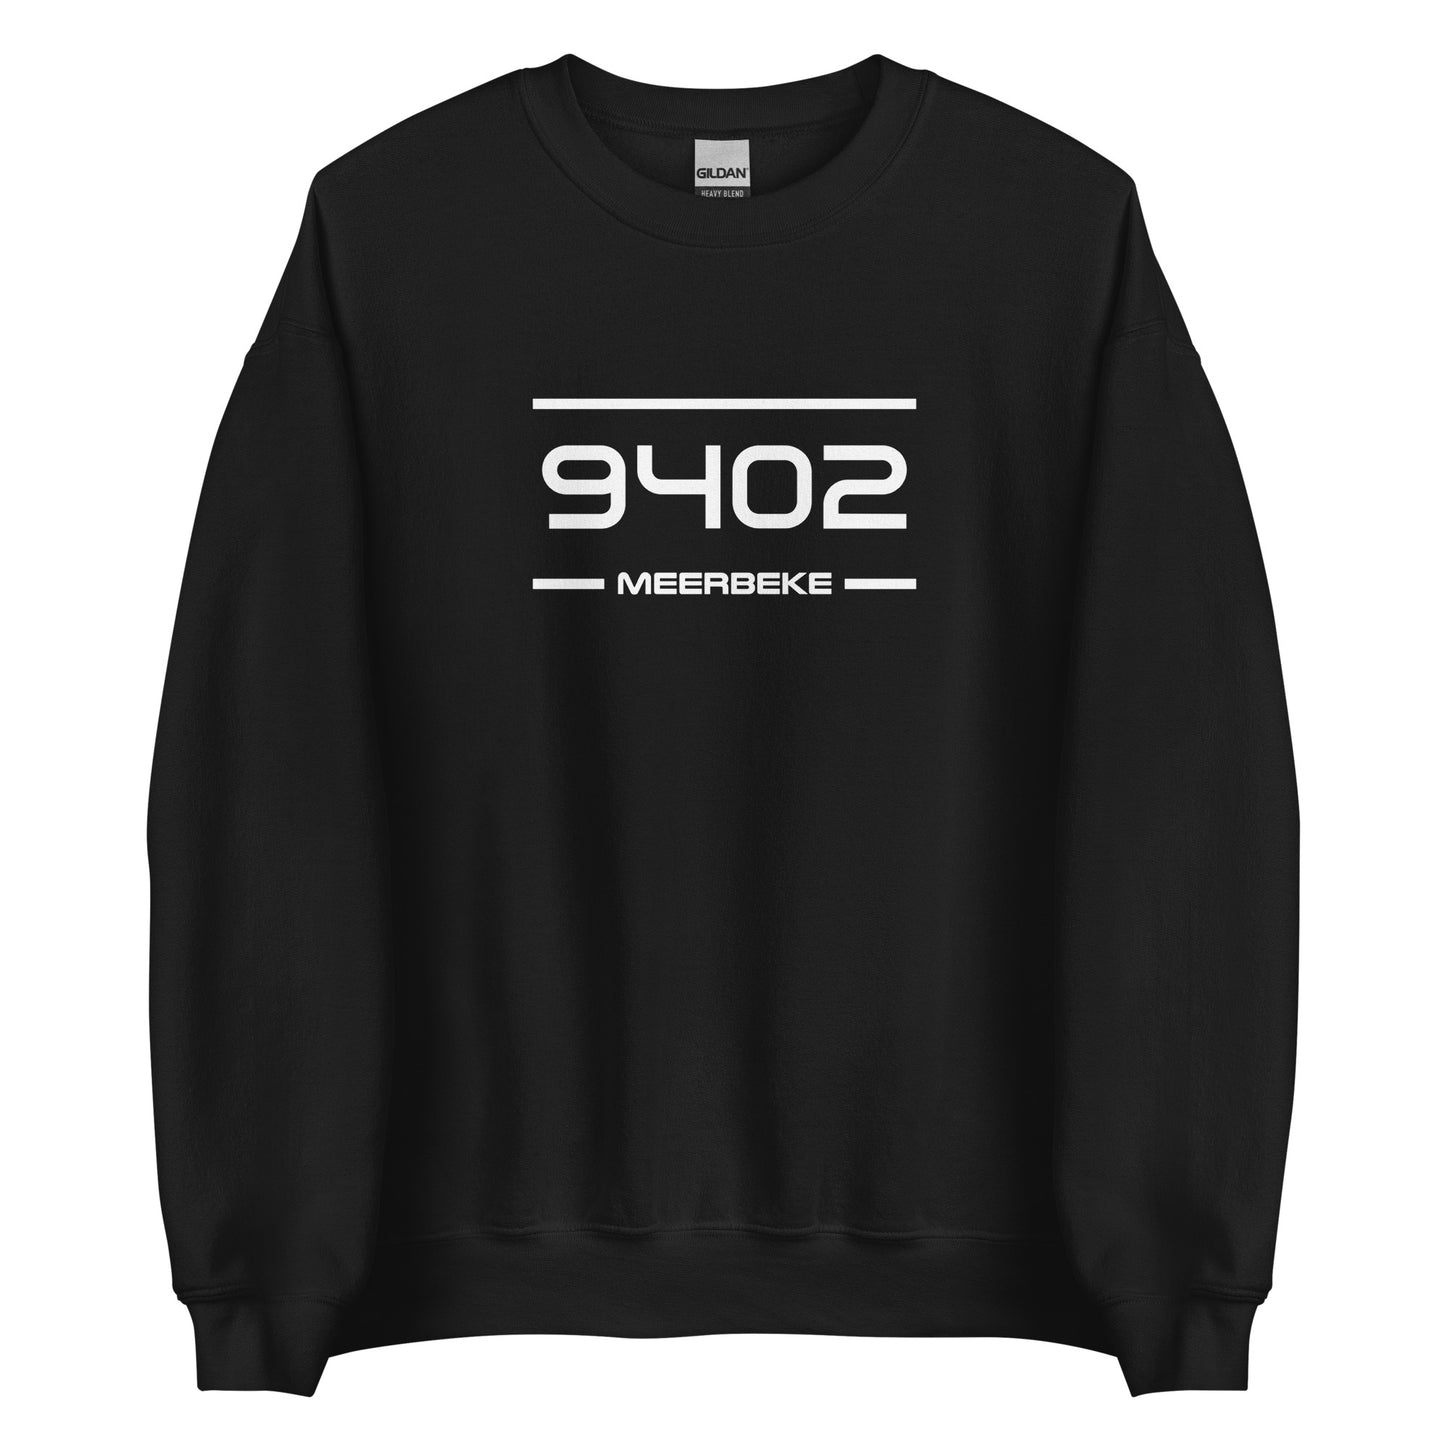 Sweater - 9402 - Meerbeke (M/V)